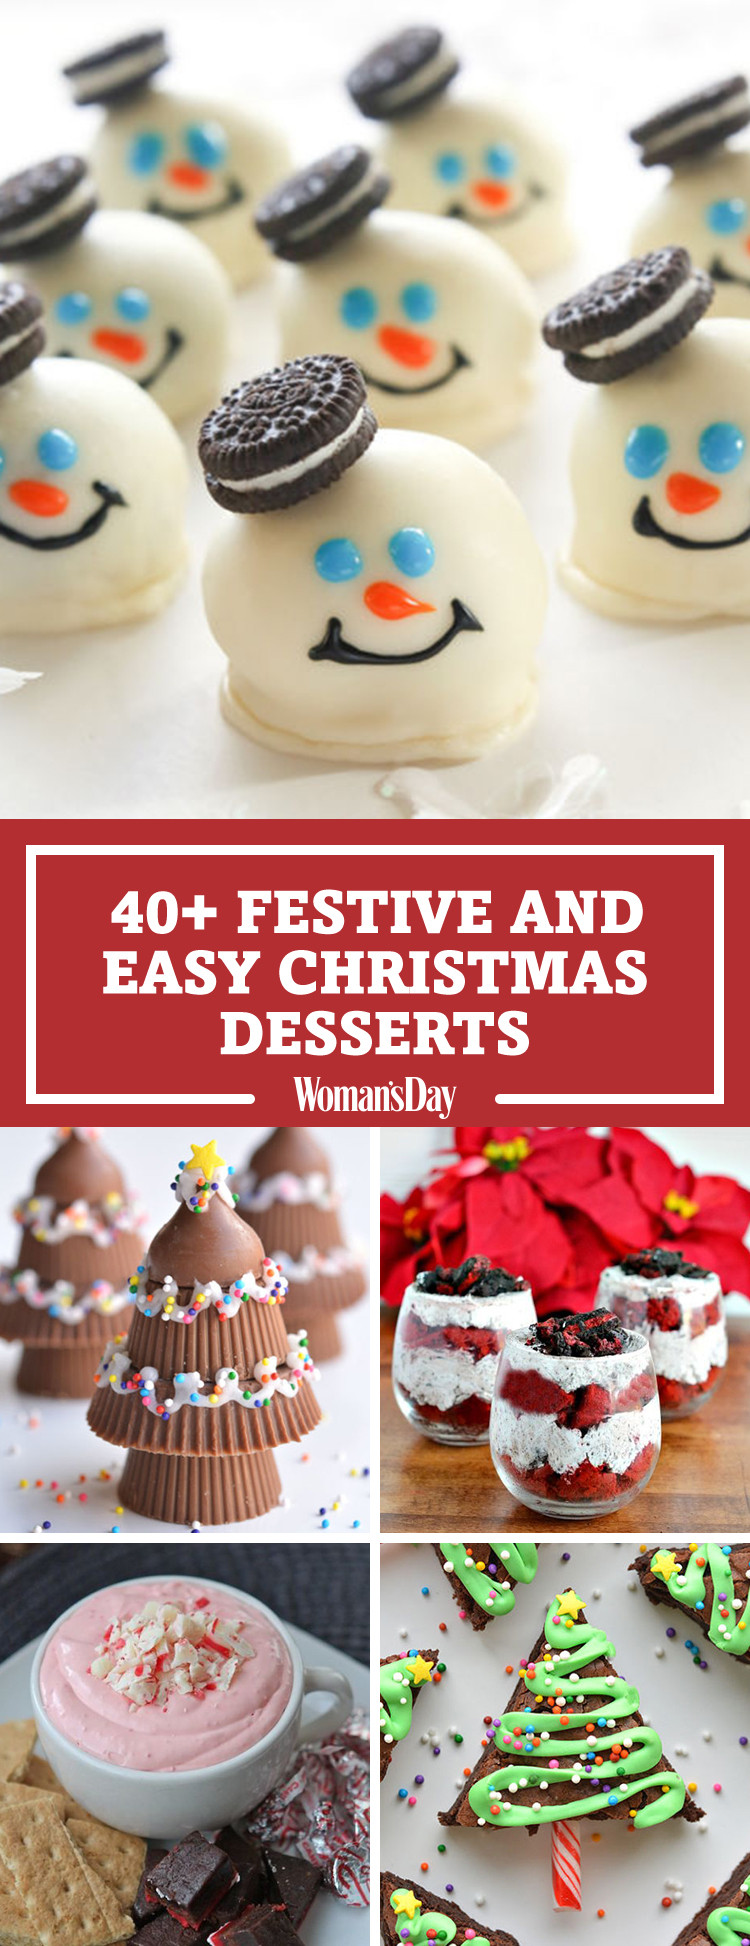 Festive Christmas Desserts
 57 Easy Christmas Dessert Recipes Best Ideas for Fun